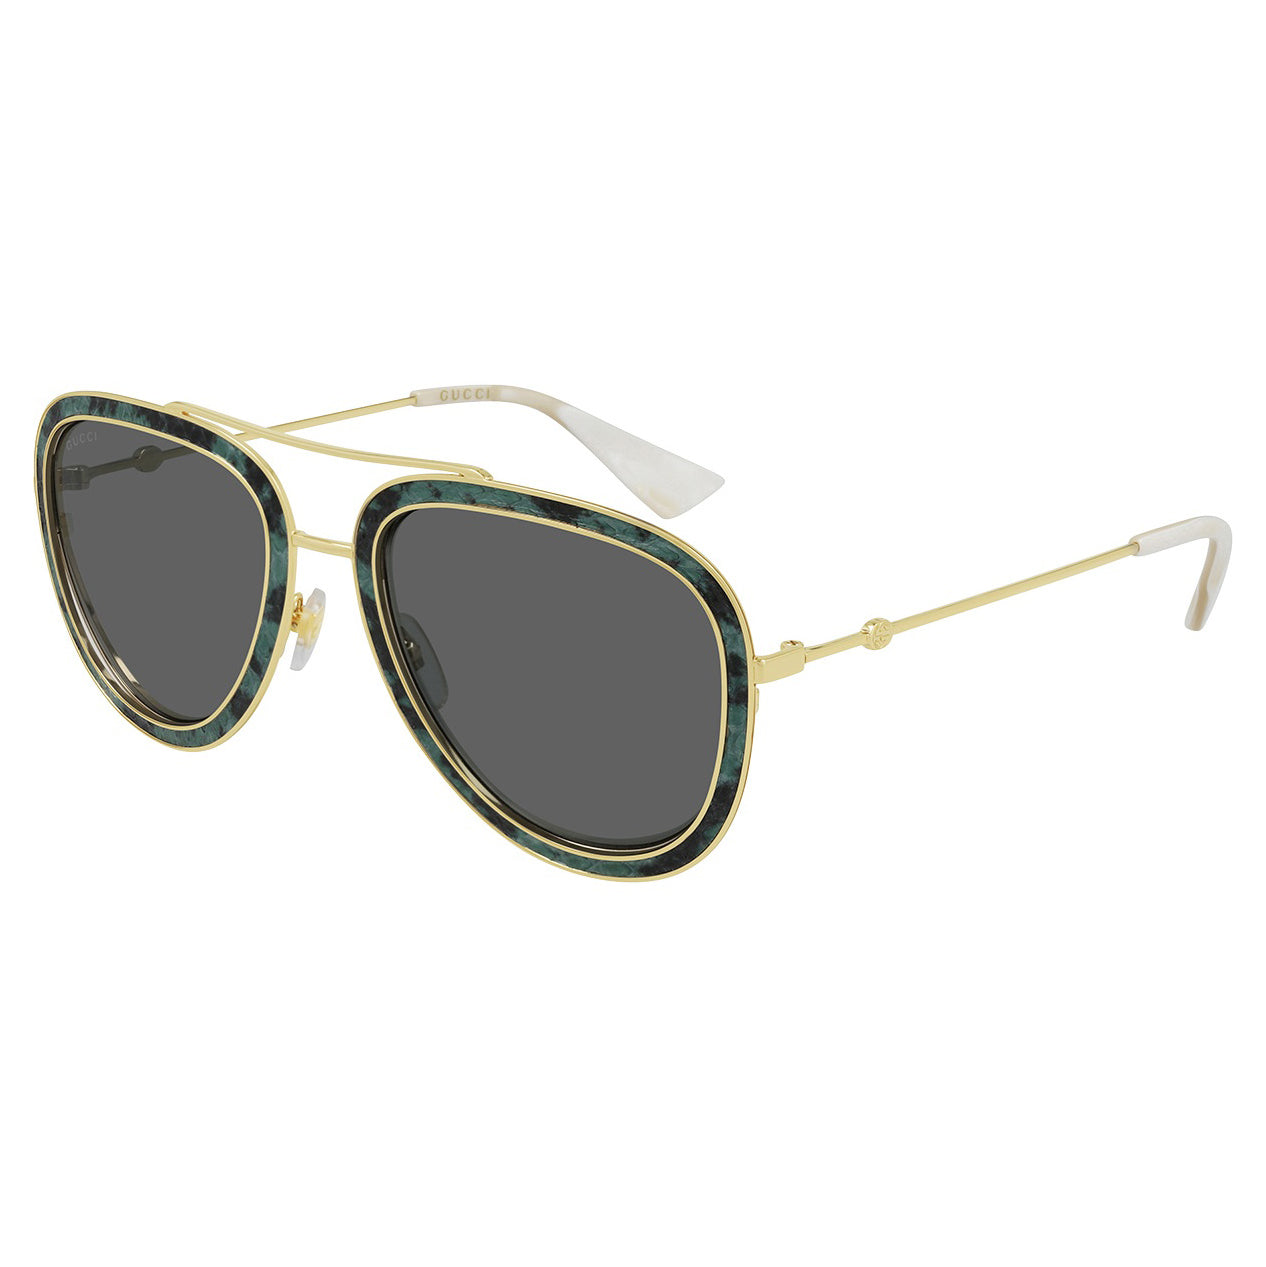 Gucci Women's Sunglasses Pilot Gold Green GG0062S LEATHER-002 55